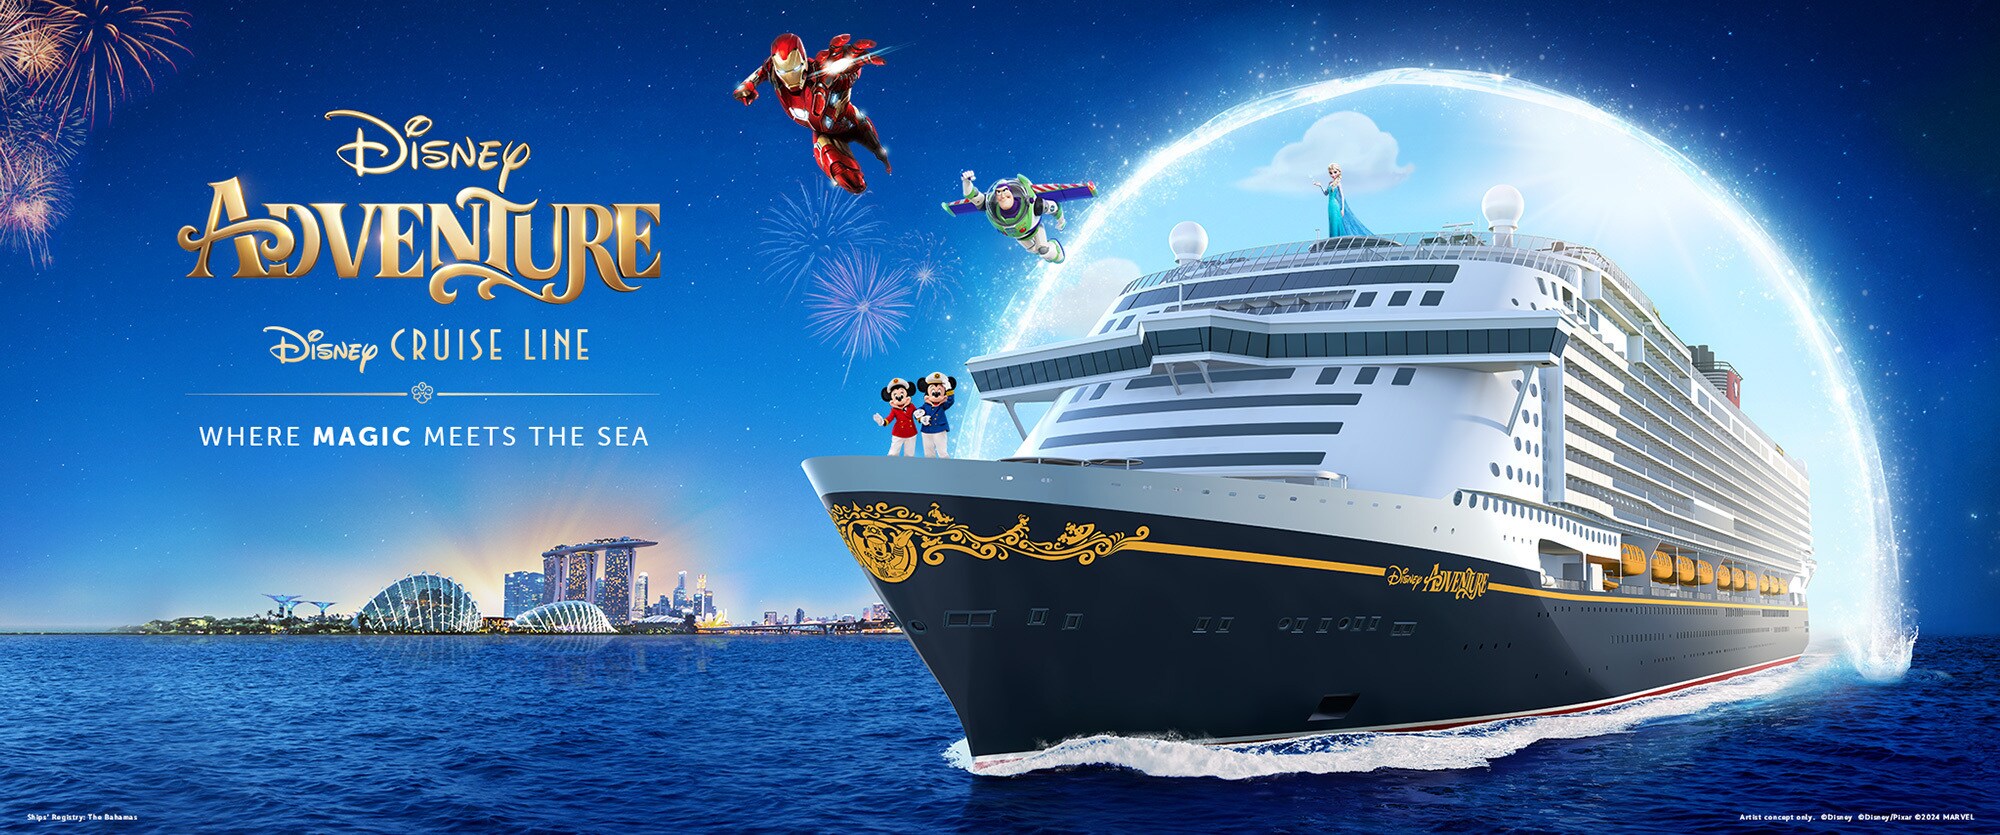 Disney Adventure | Disney Cruise Line |